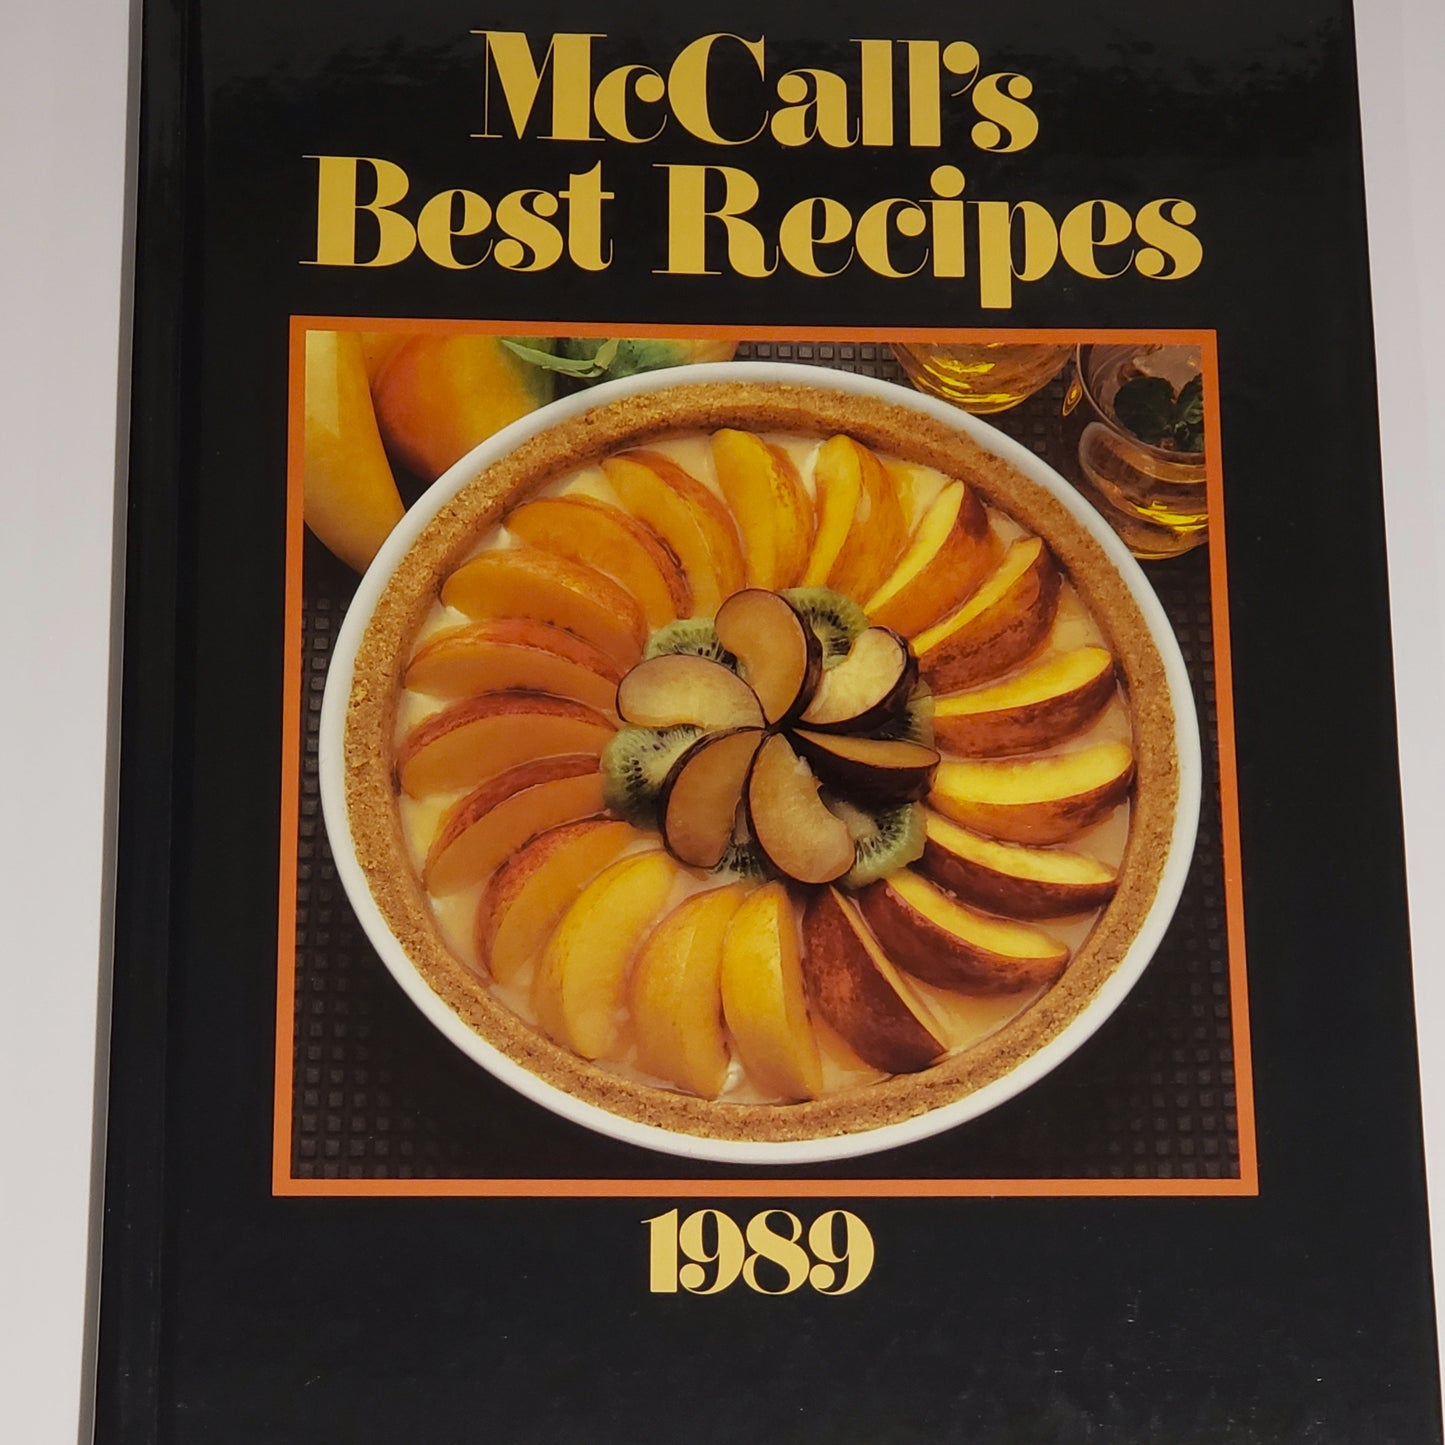 McCall's Best Recipes 1989